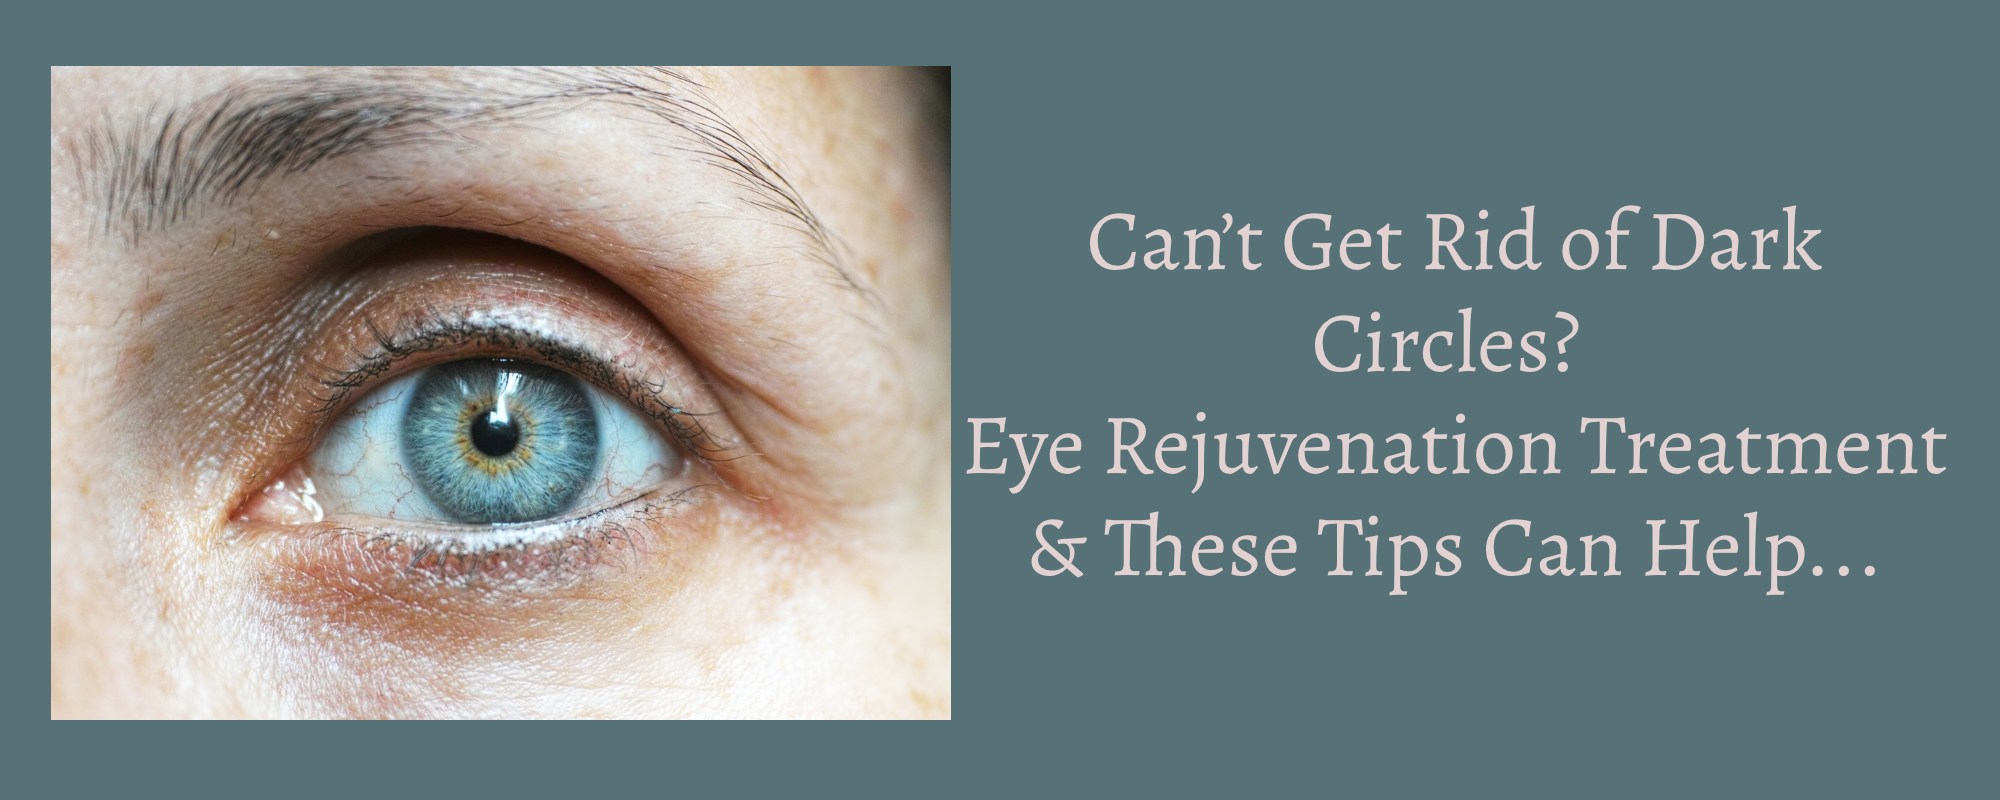 eye rejuvenation treatment